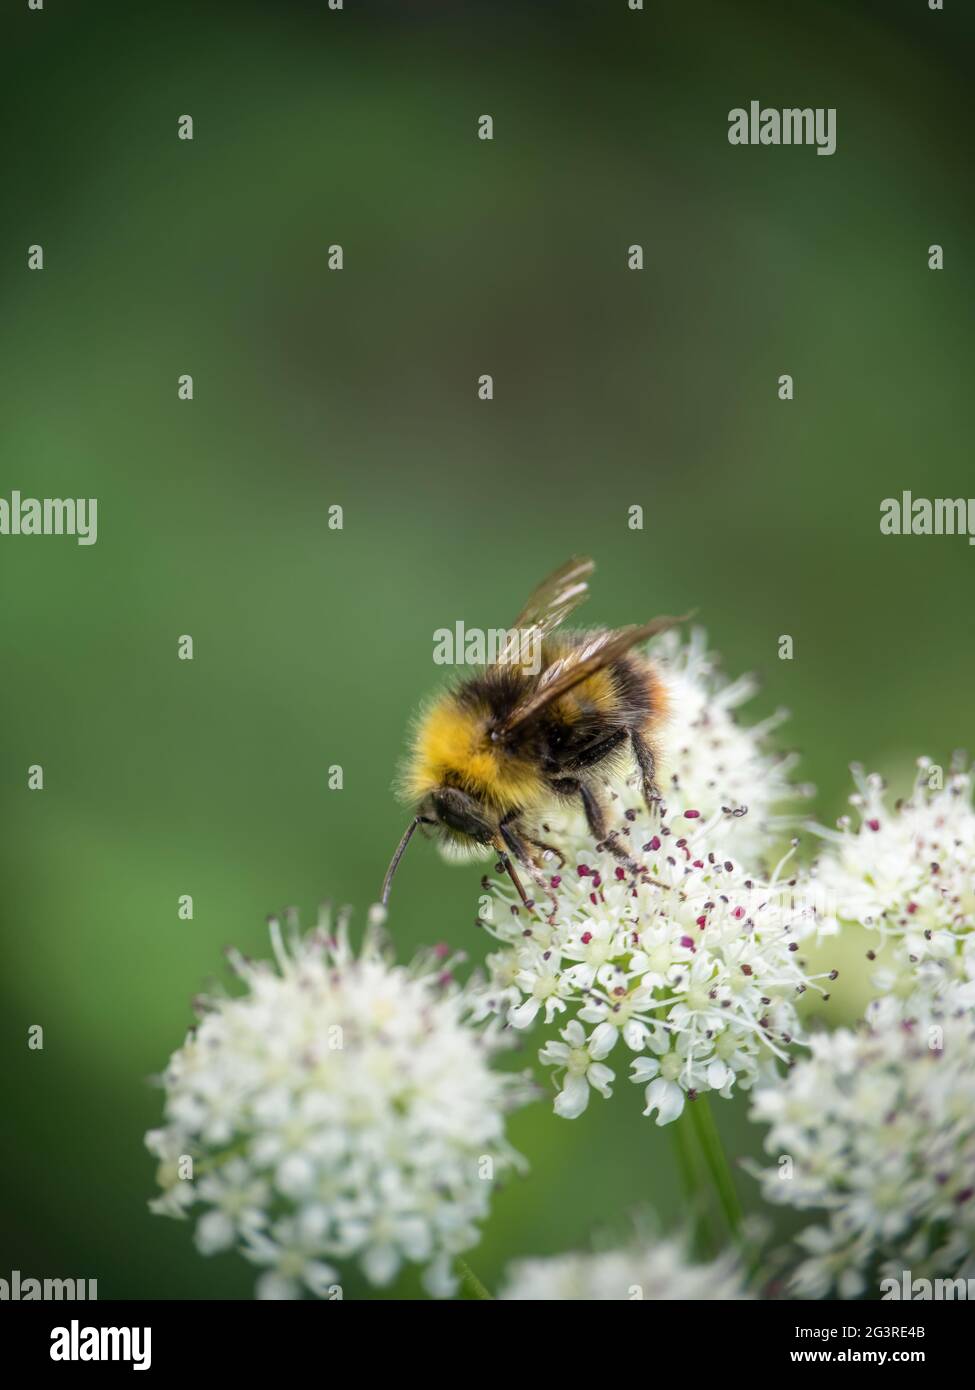 Male Early-nesting bumblebee aka Bombus pratorum on Hemlock flower. Pollination. Stock Photo